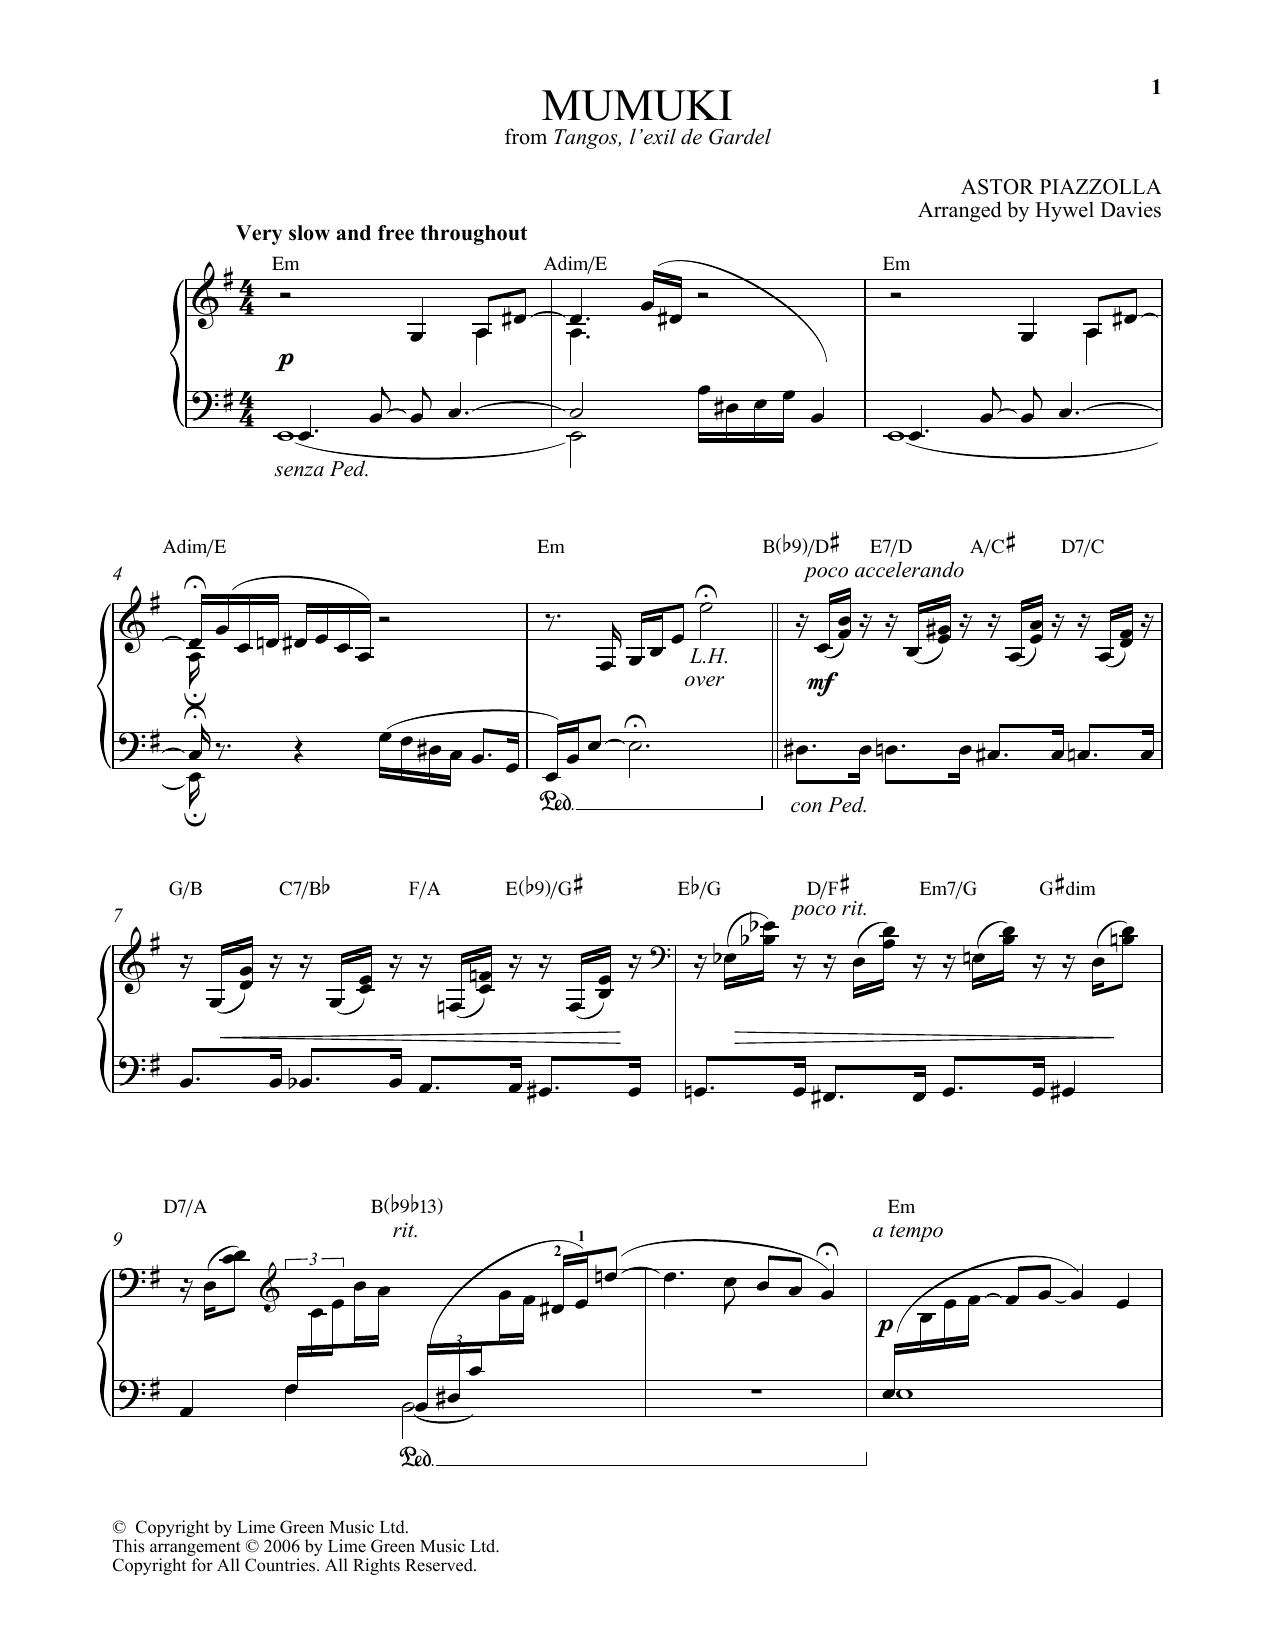 Astor Piazzolla Mumuki sheet music notes and chords. Download Printable PDF.